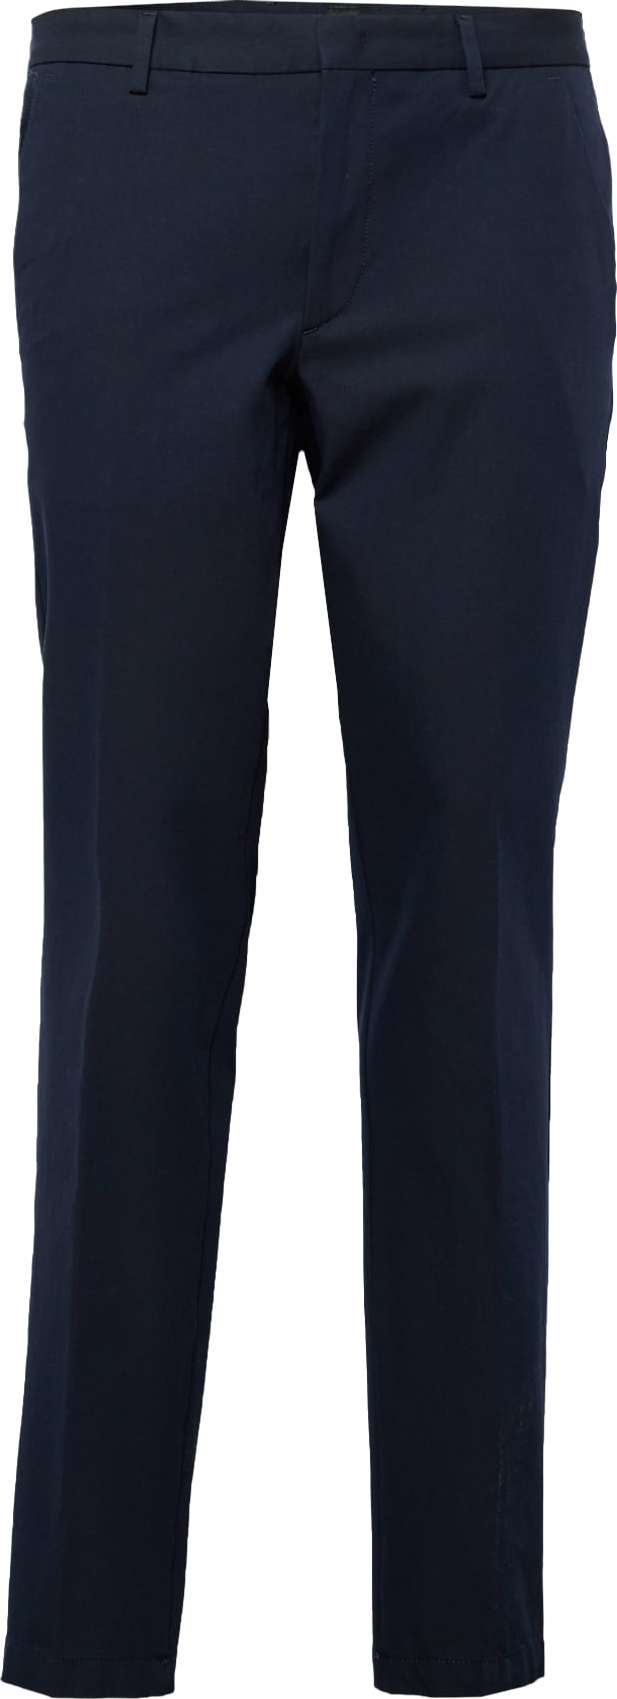 BOSS Black Chino kalhoty 'Kaito' námořnická modř